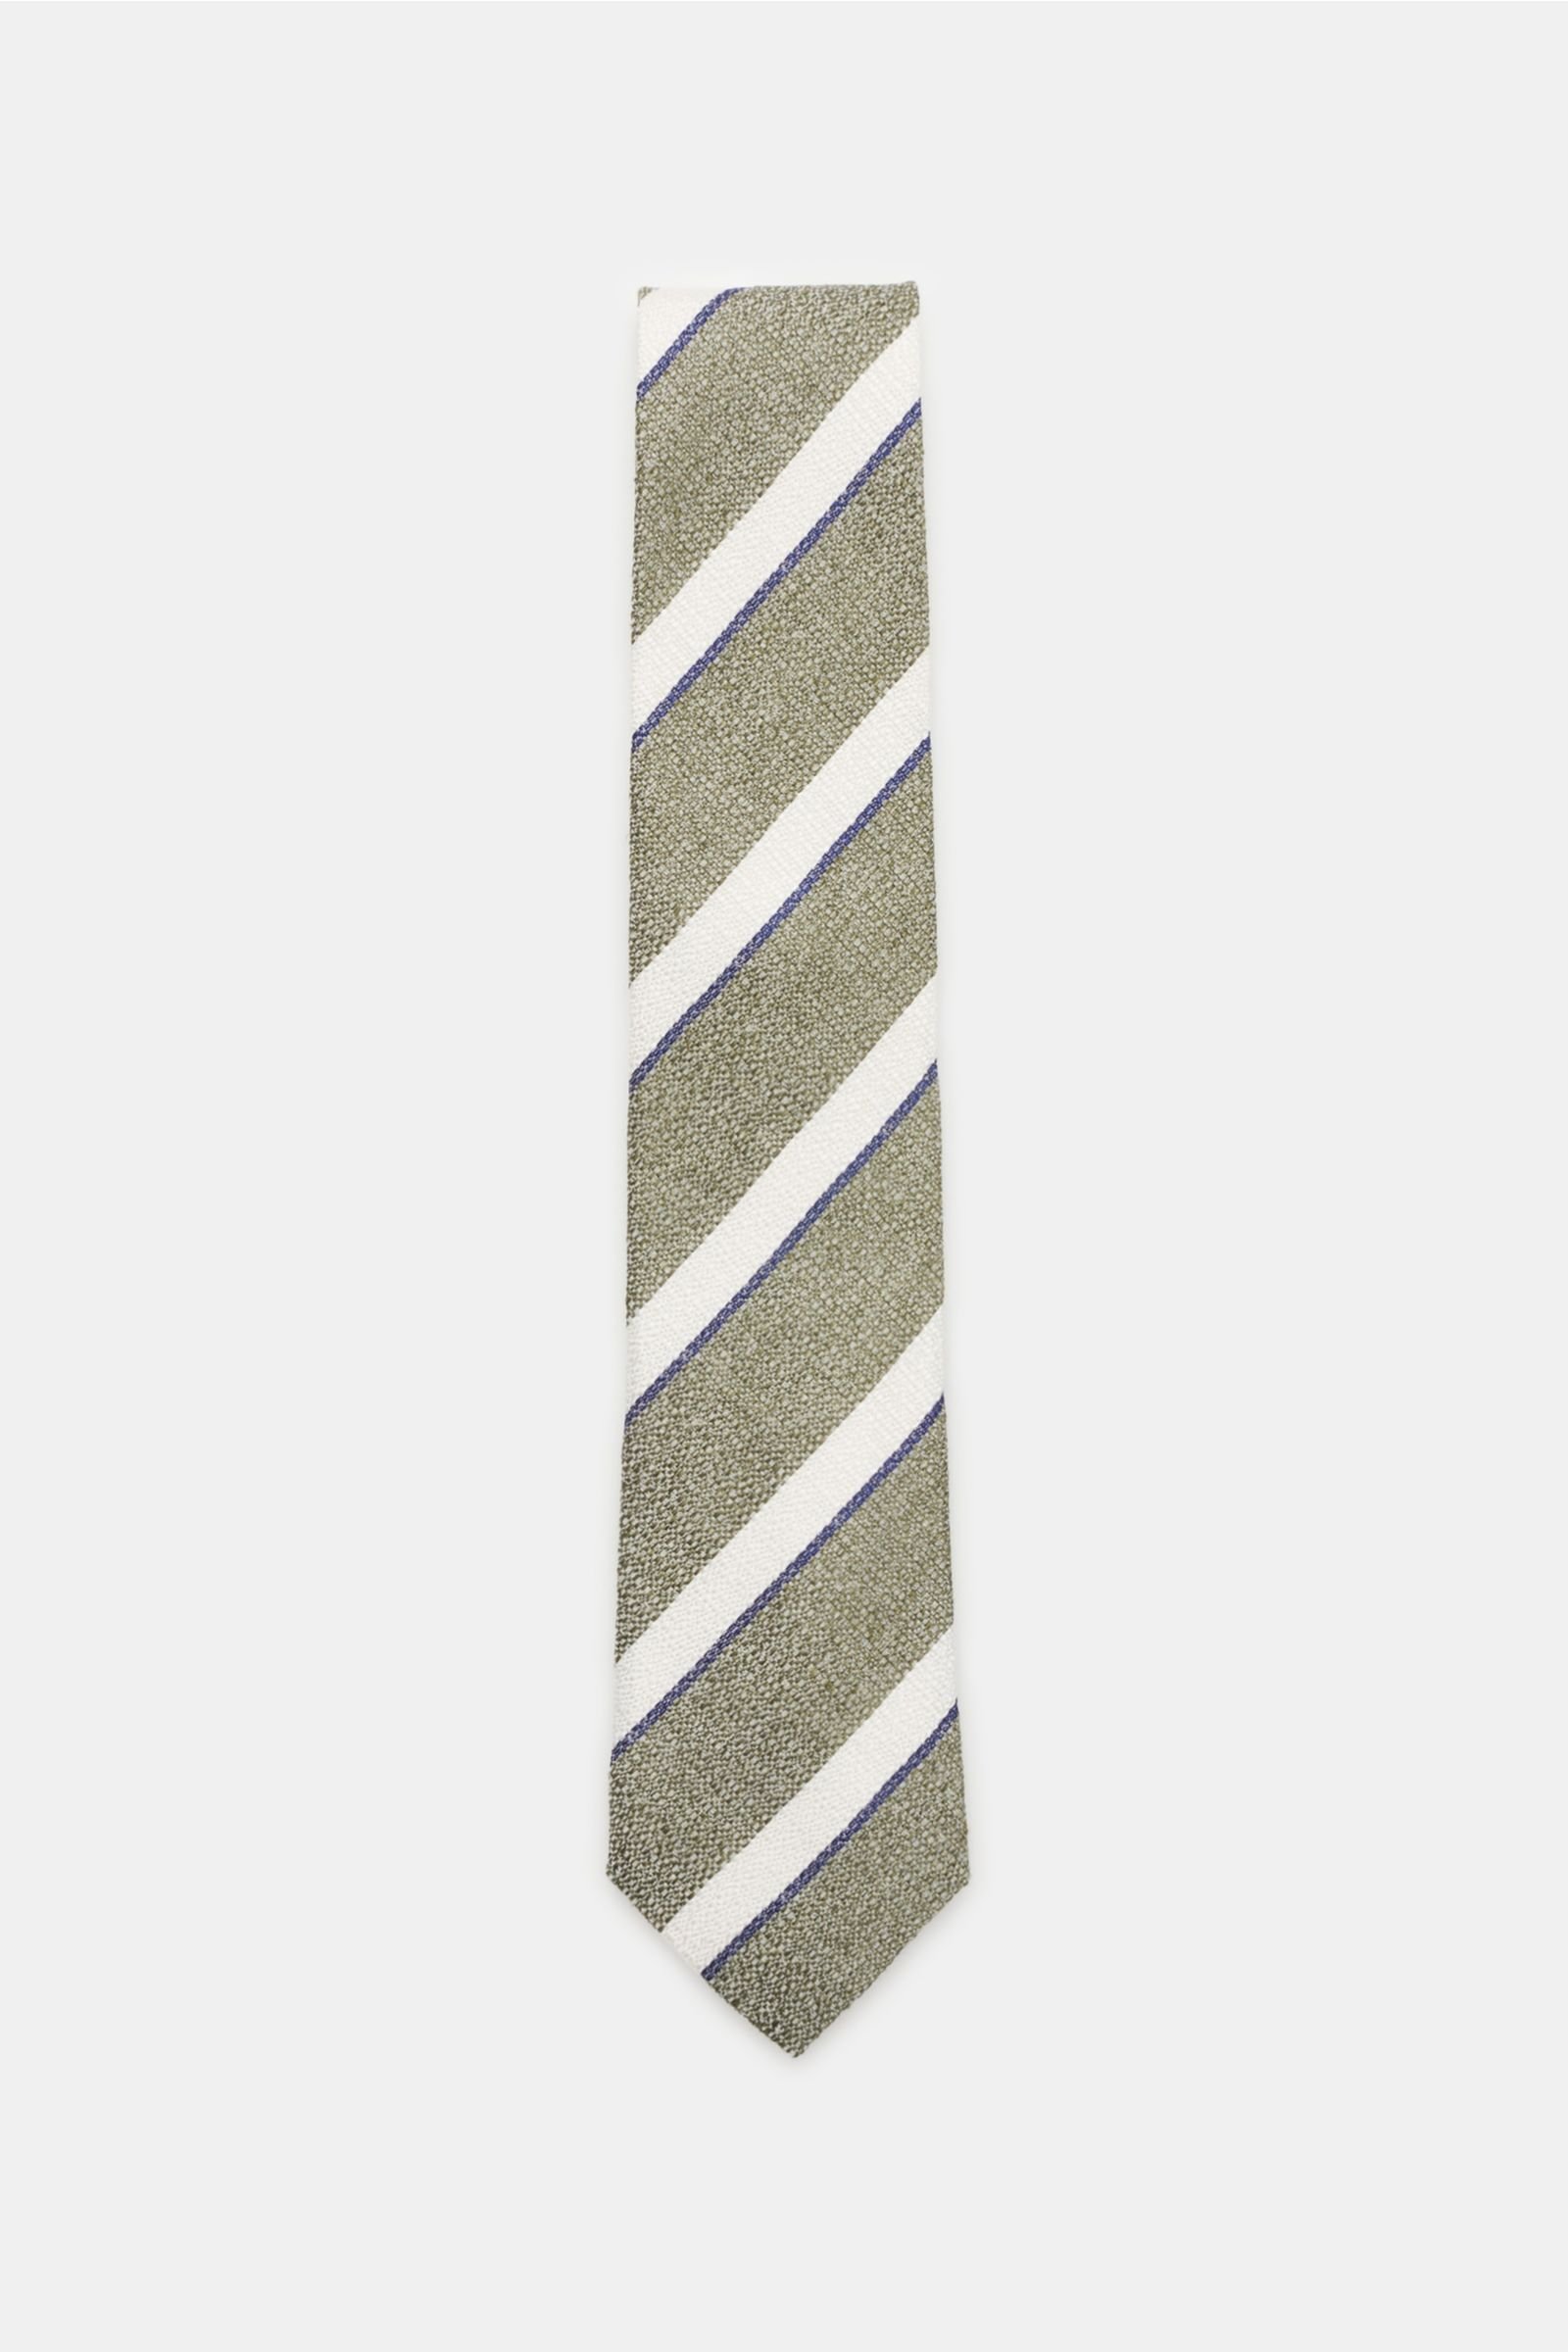 Tie olive/white striped